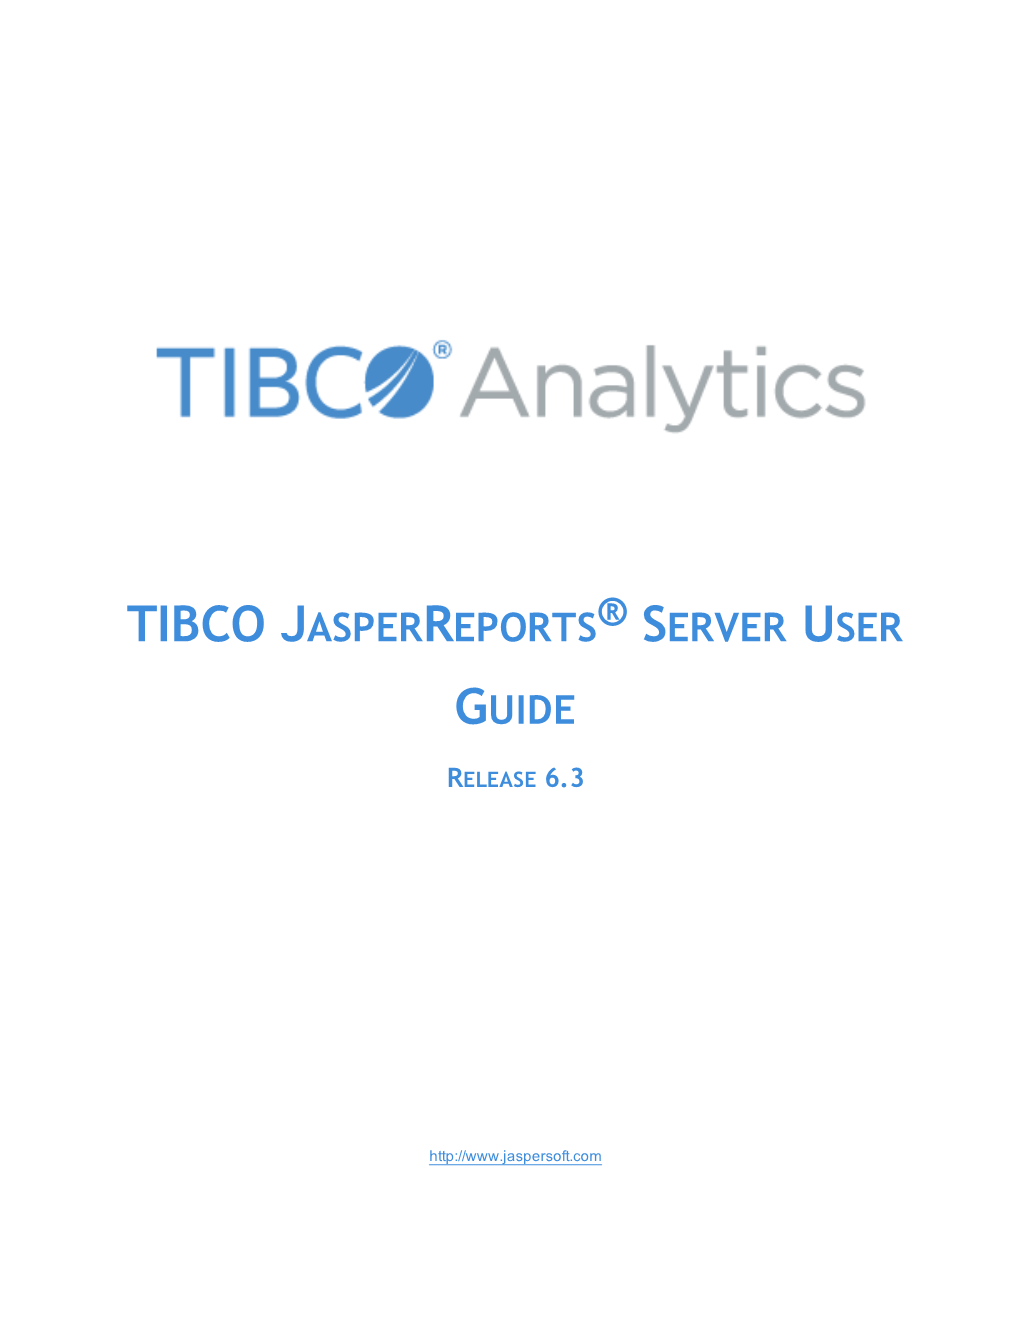 TIBCO Jasperreports Server User Guide